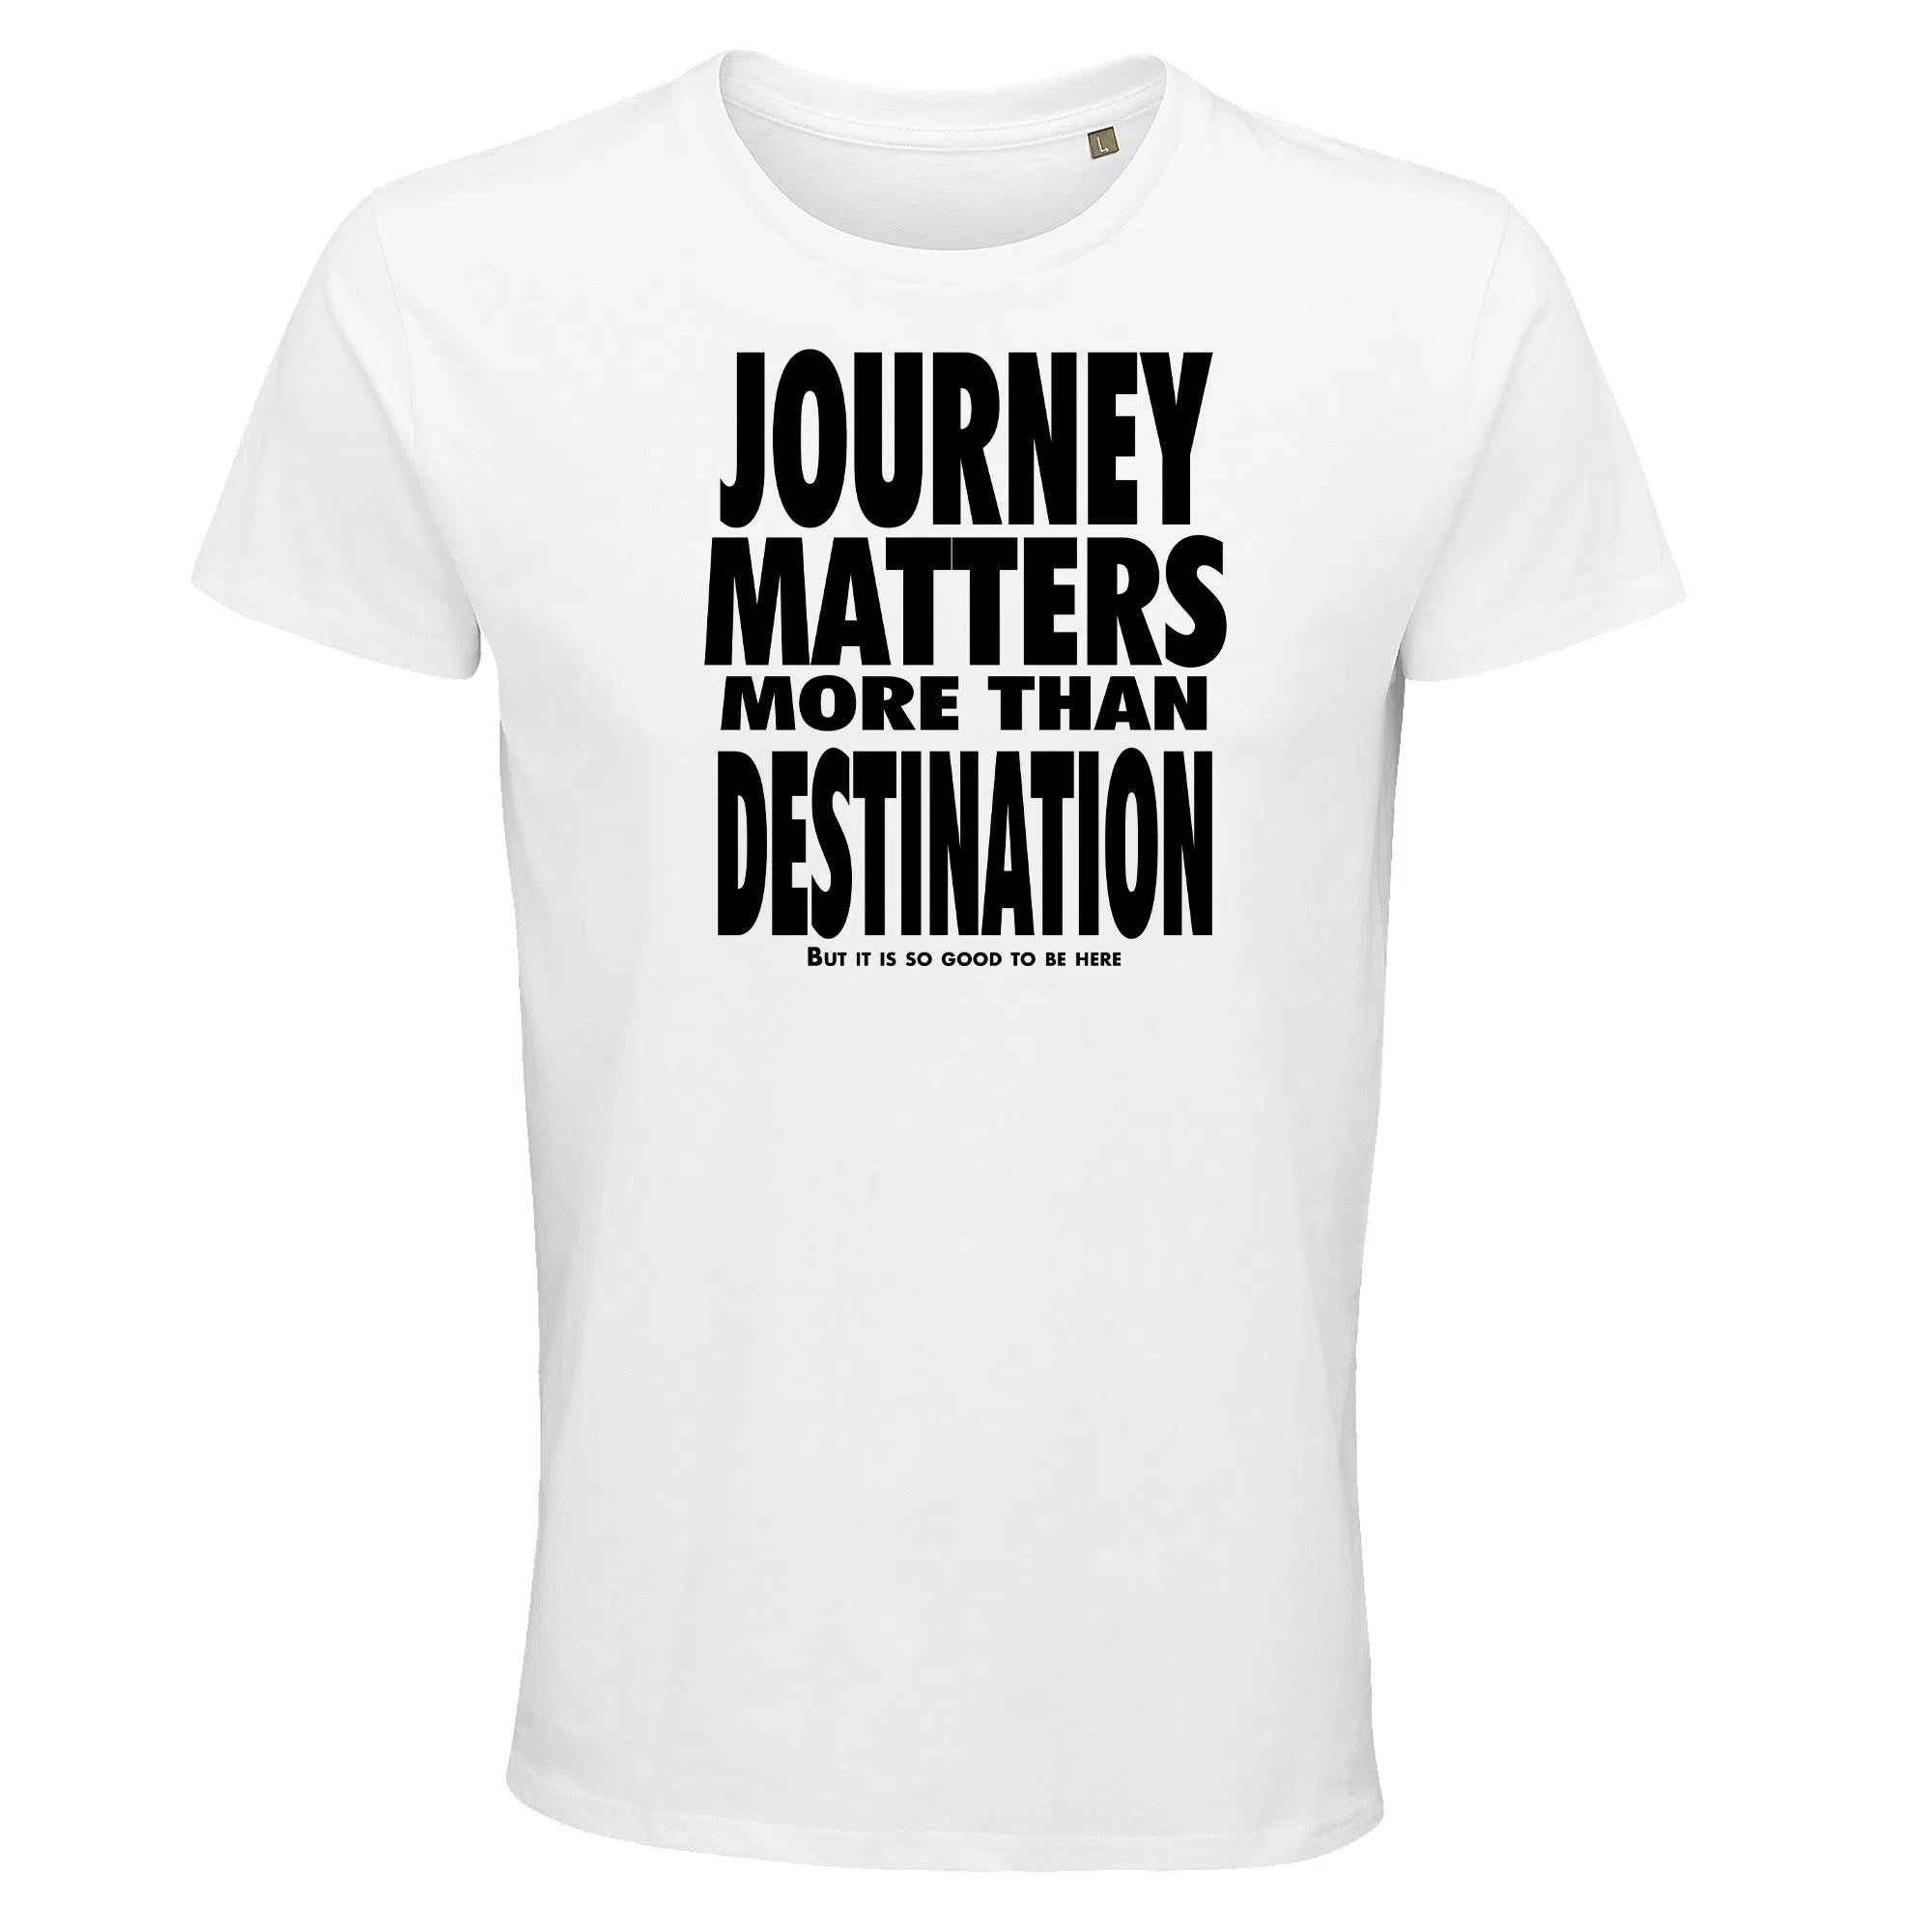 Journey matters more than destination.-Imagesdartistes